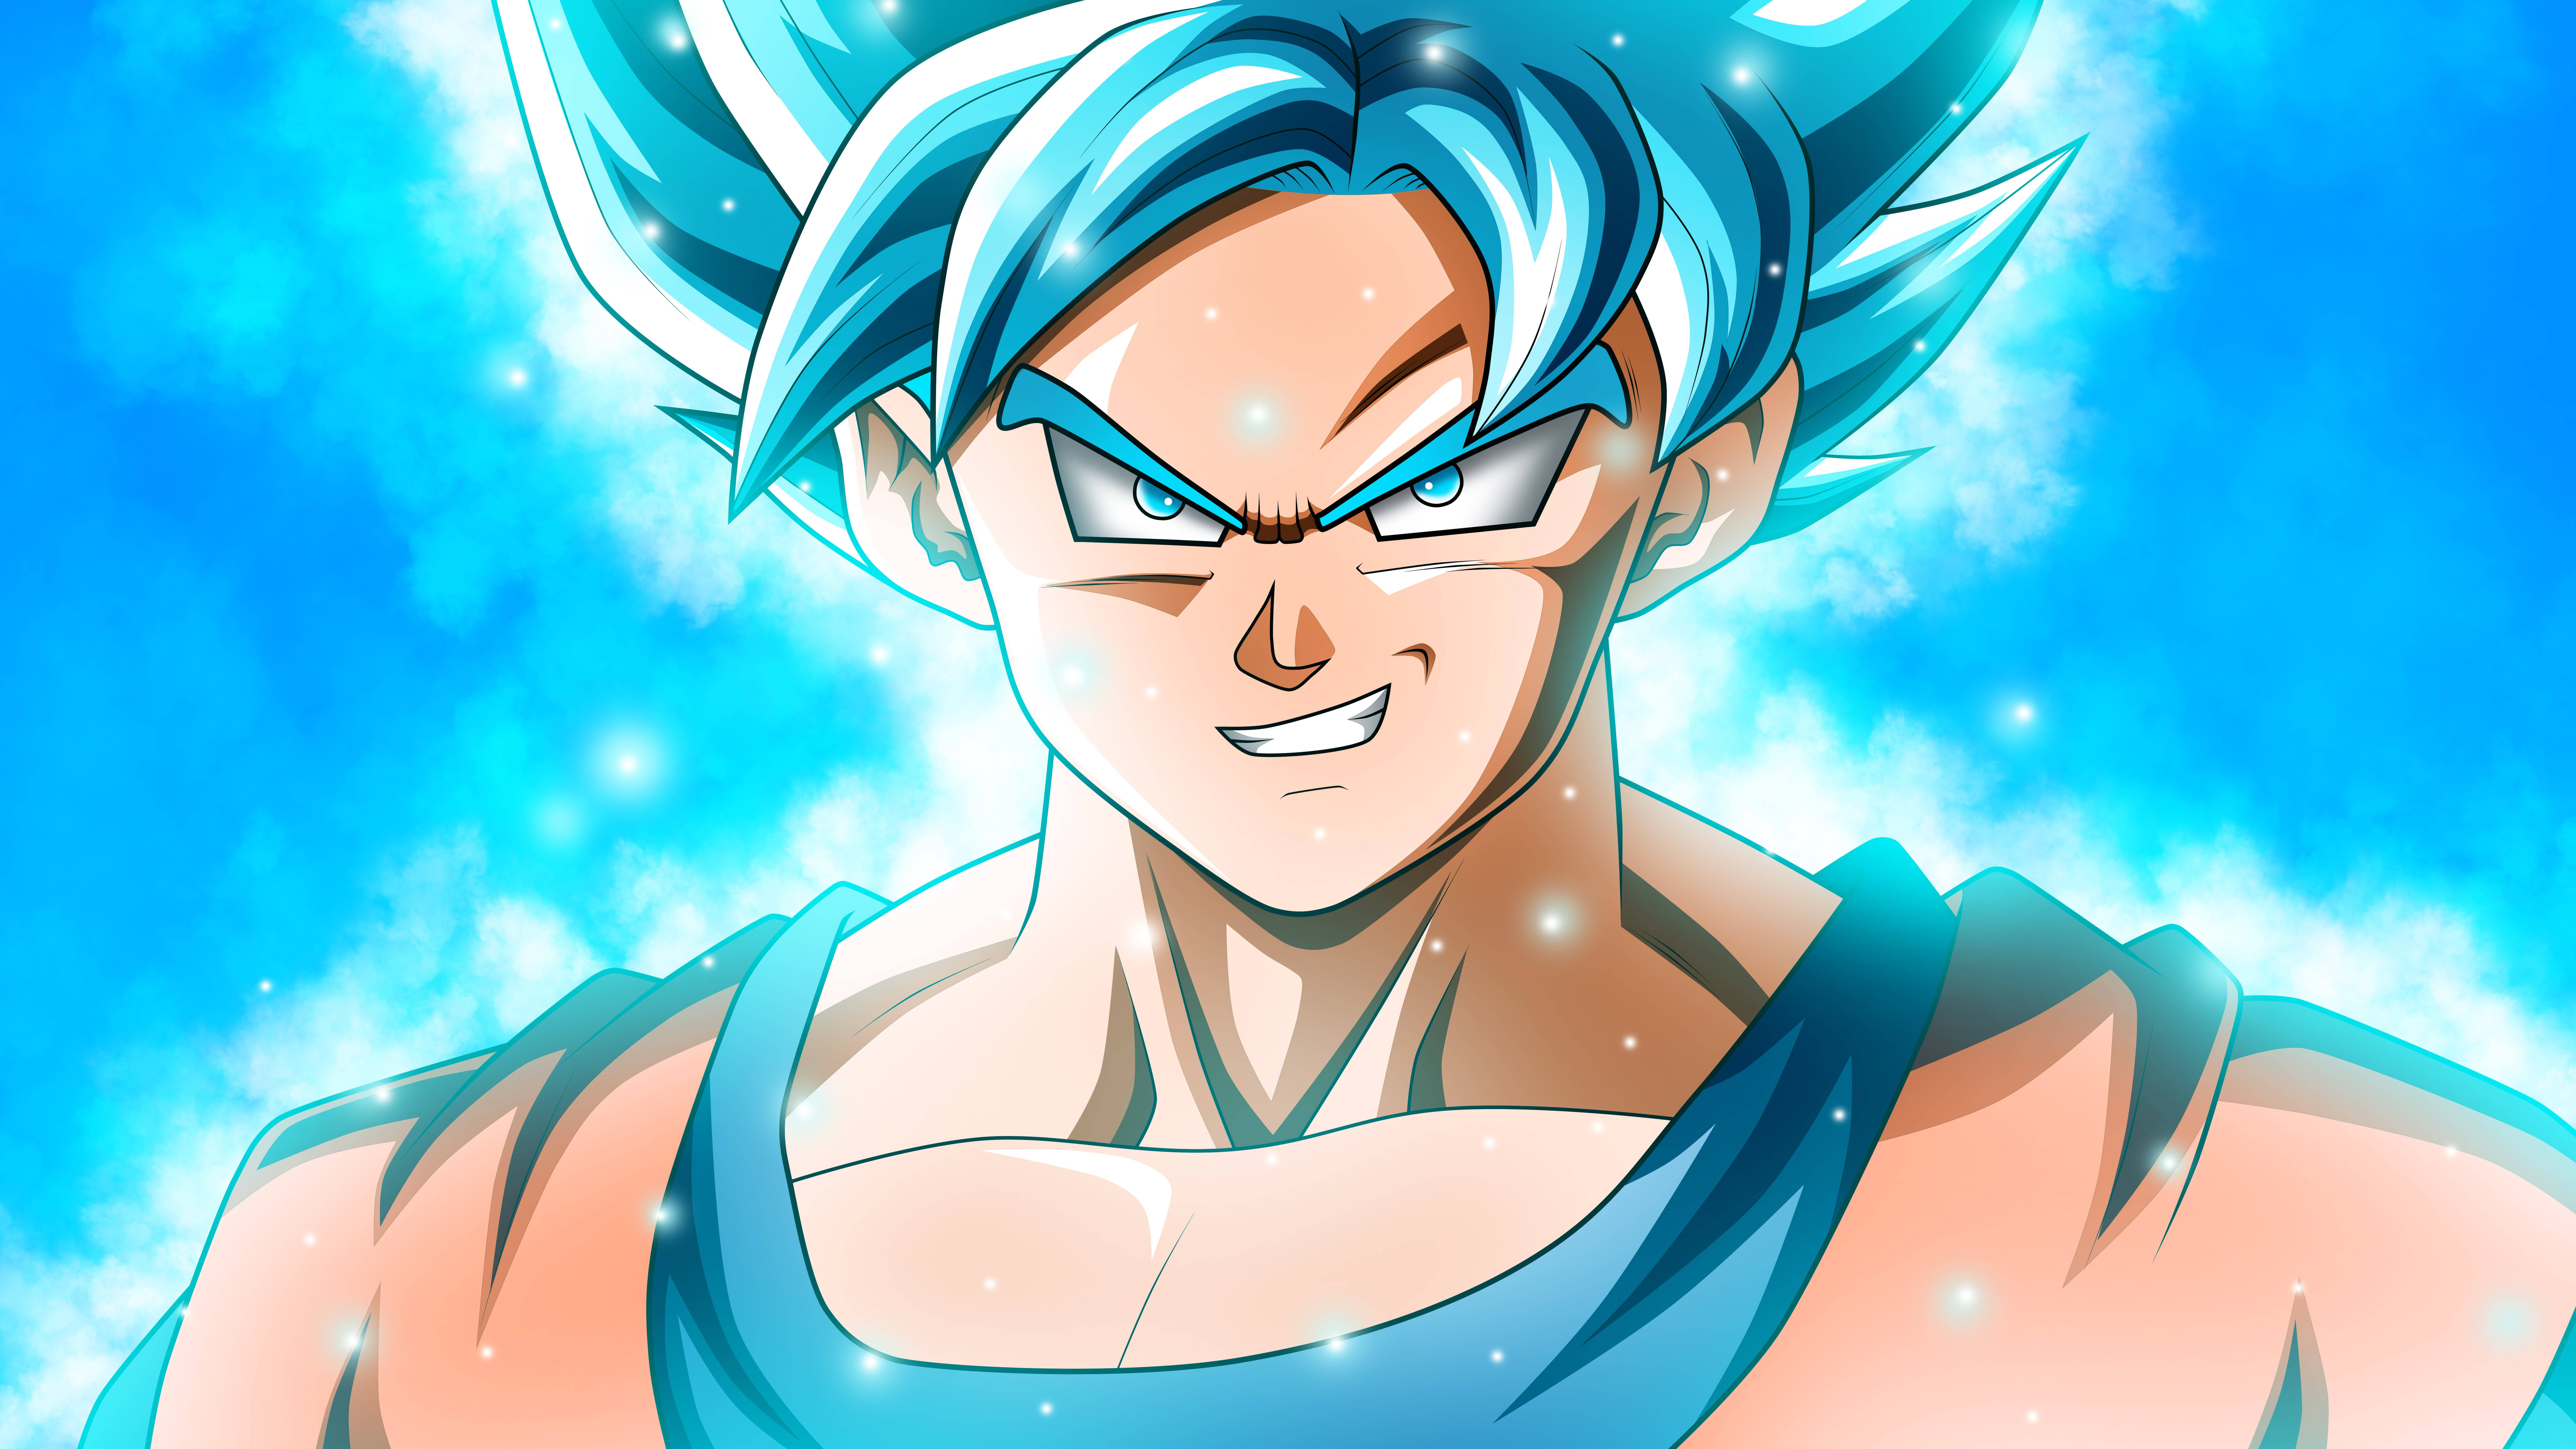 Download Goku 4k Ultra Hd Smirking Super Saiyan Blue Wallpaper | Wallpapers .com